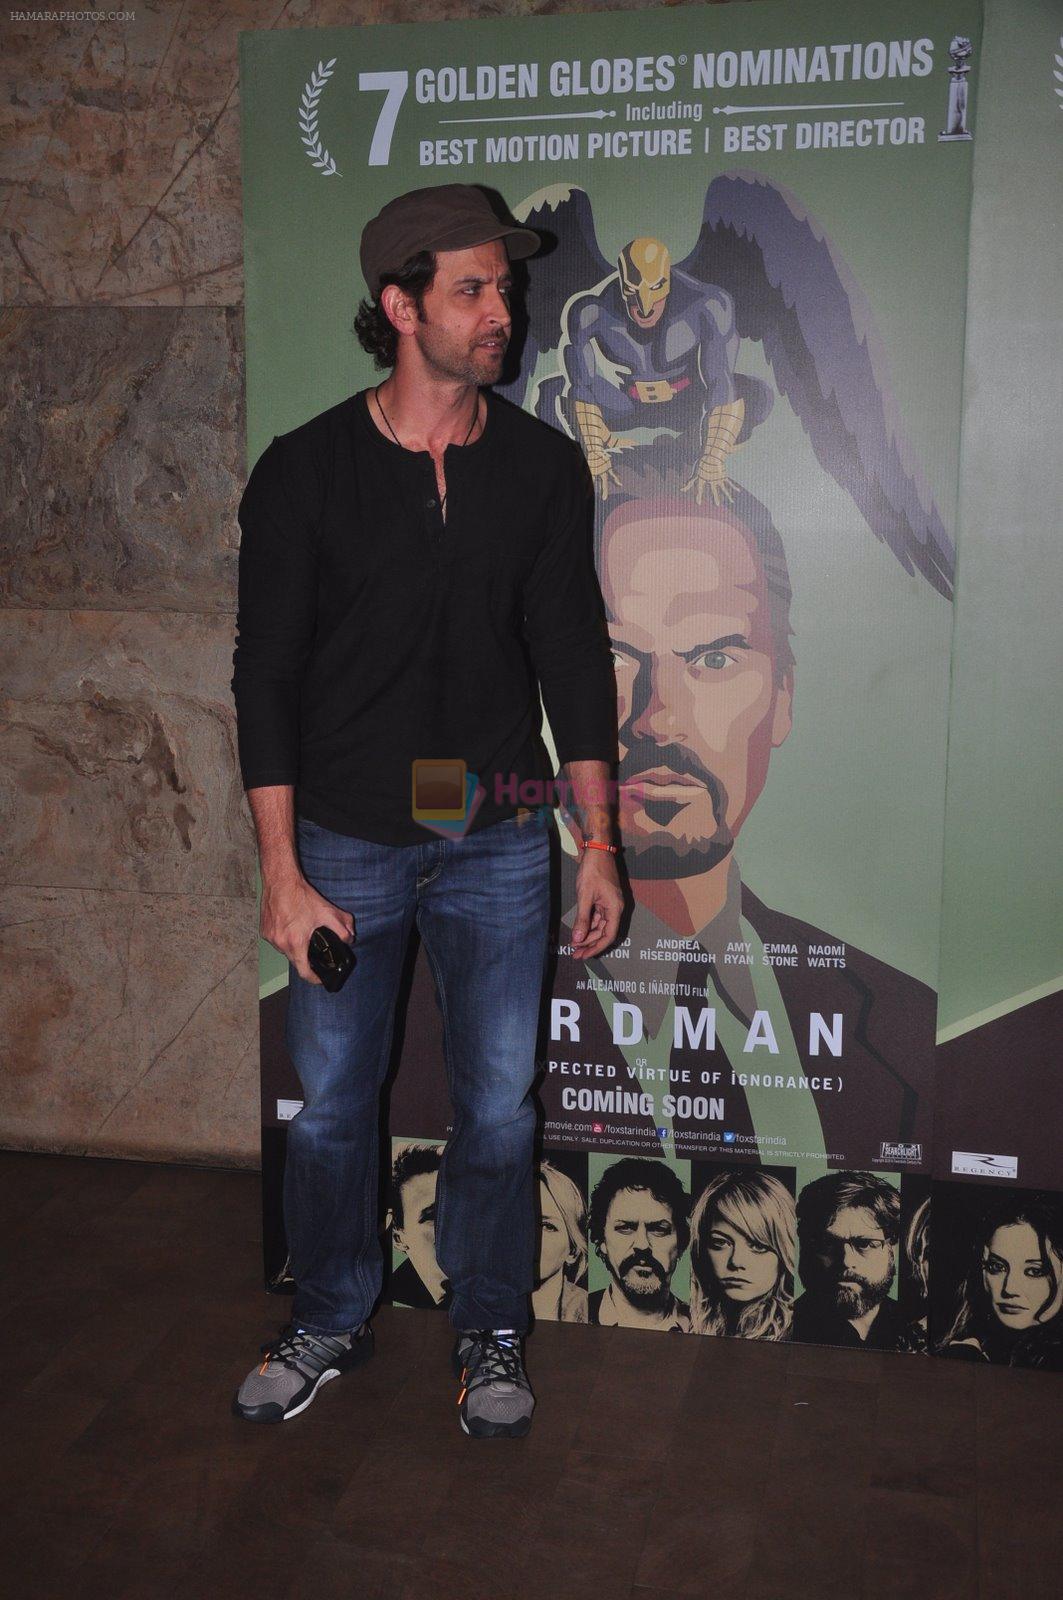 Hrithik Roshan at Birdman screening in Lightbox, Mumbai on 16th Jan 2015